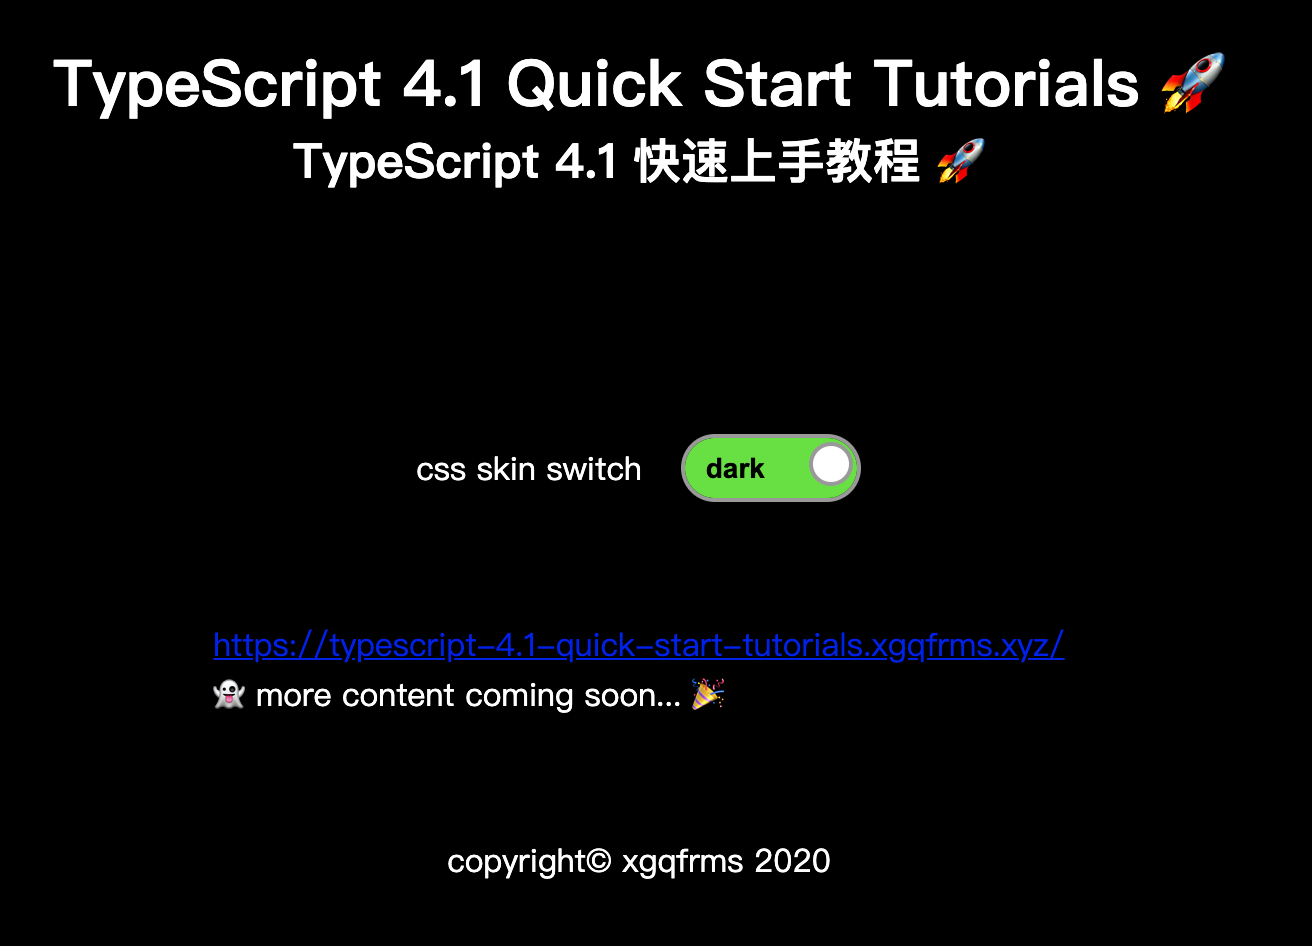 New TypeScript 4.1 version released